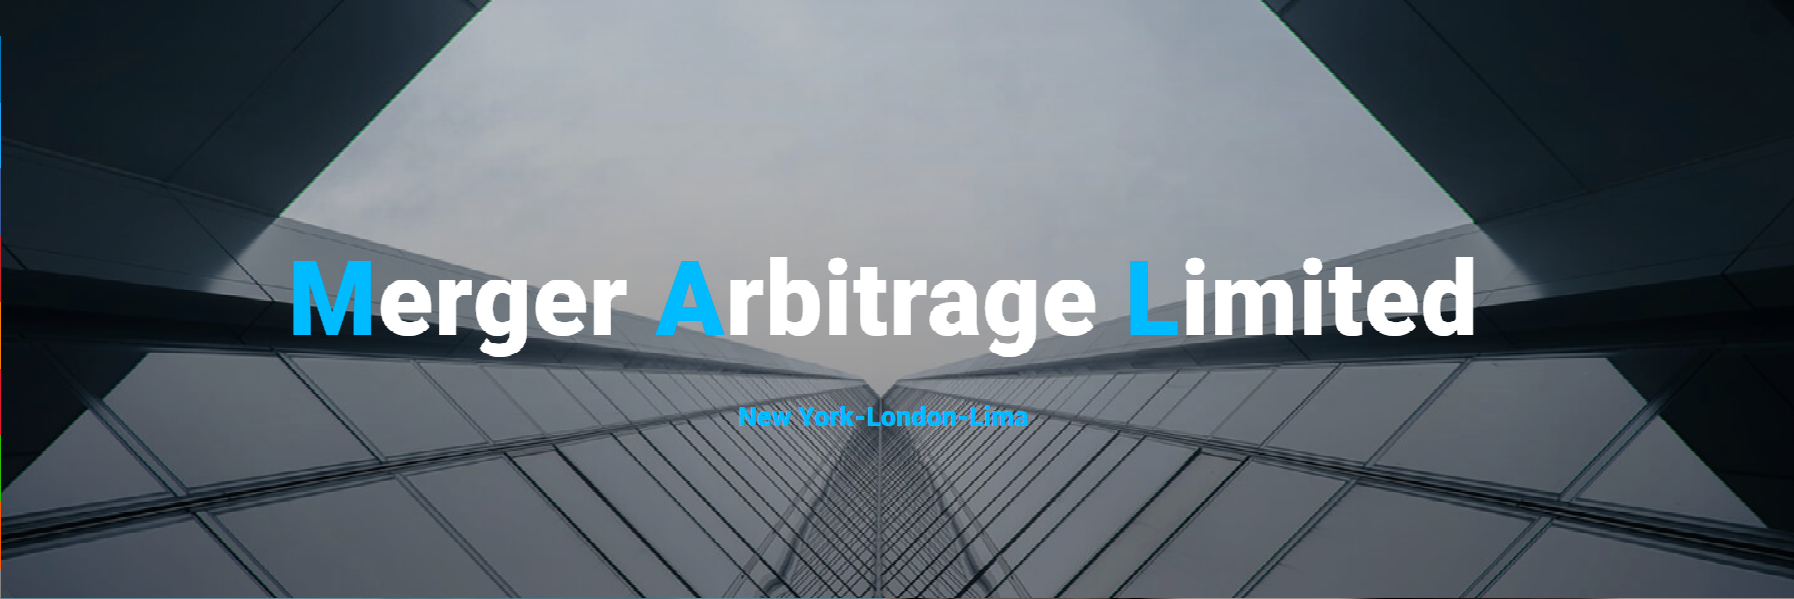 Merger Arbitrage Limited